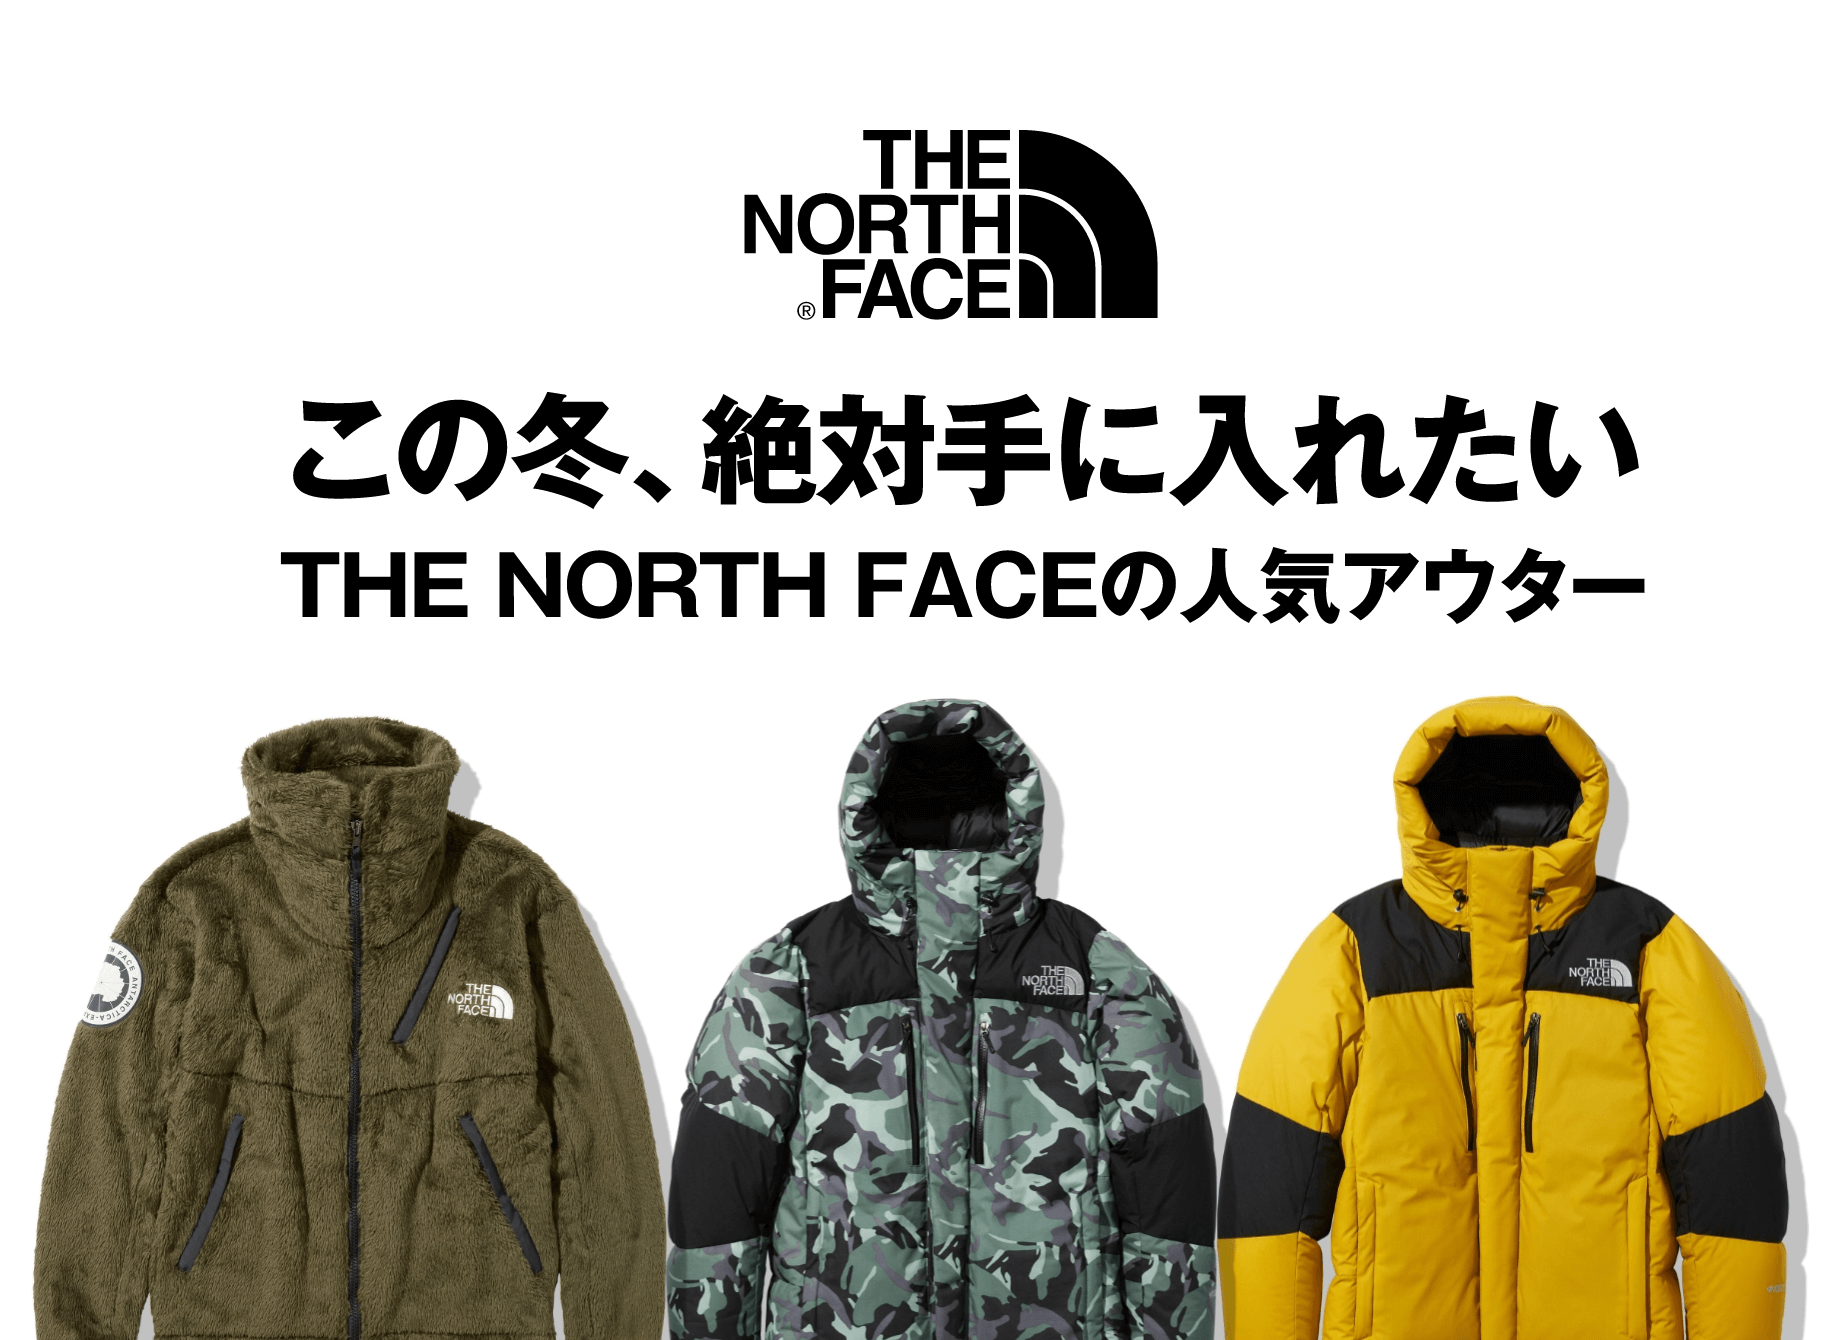 THE NORTH FACE バルトロライトジャケット 黒 ND91950 メンズ   安い 順